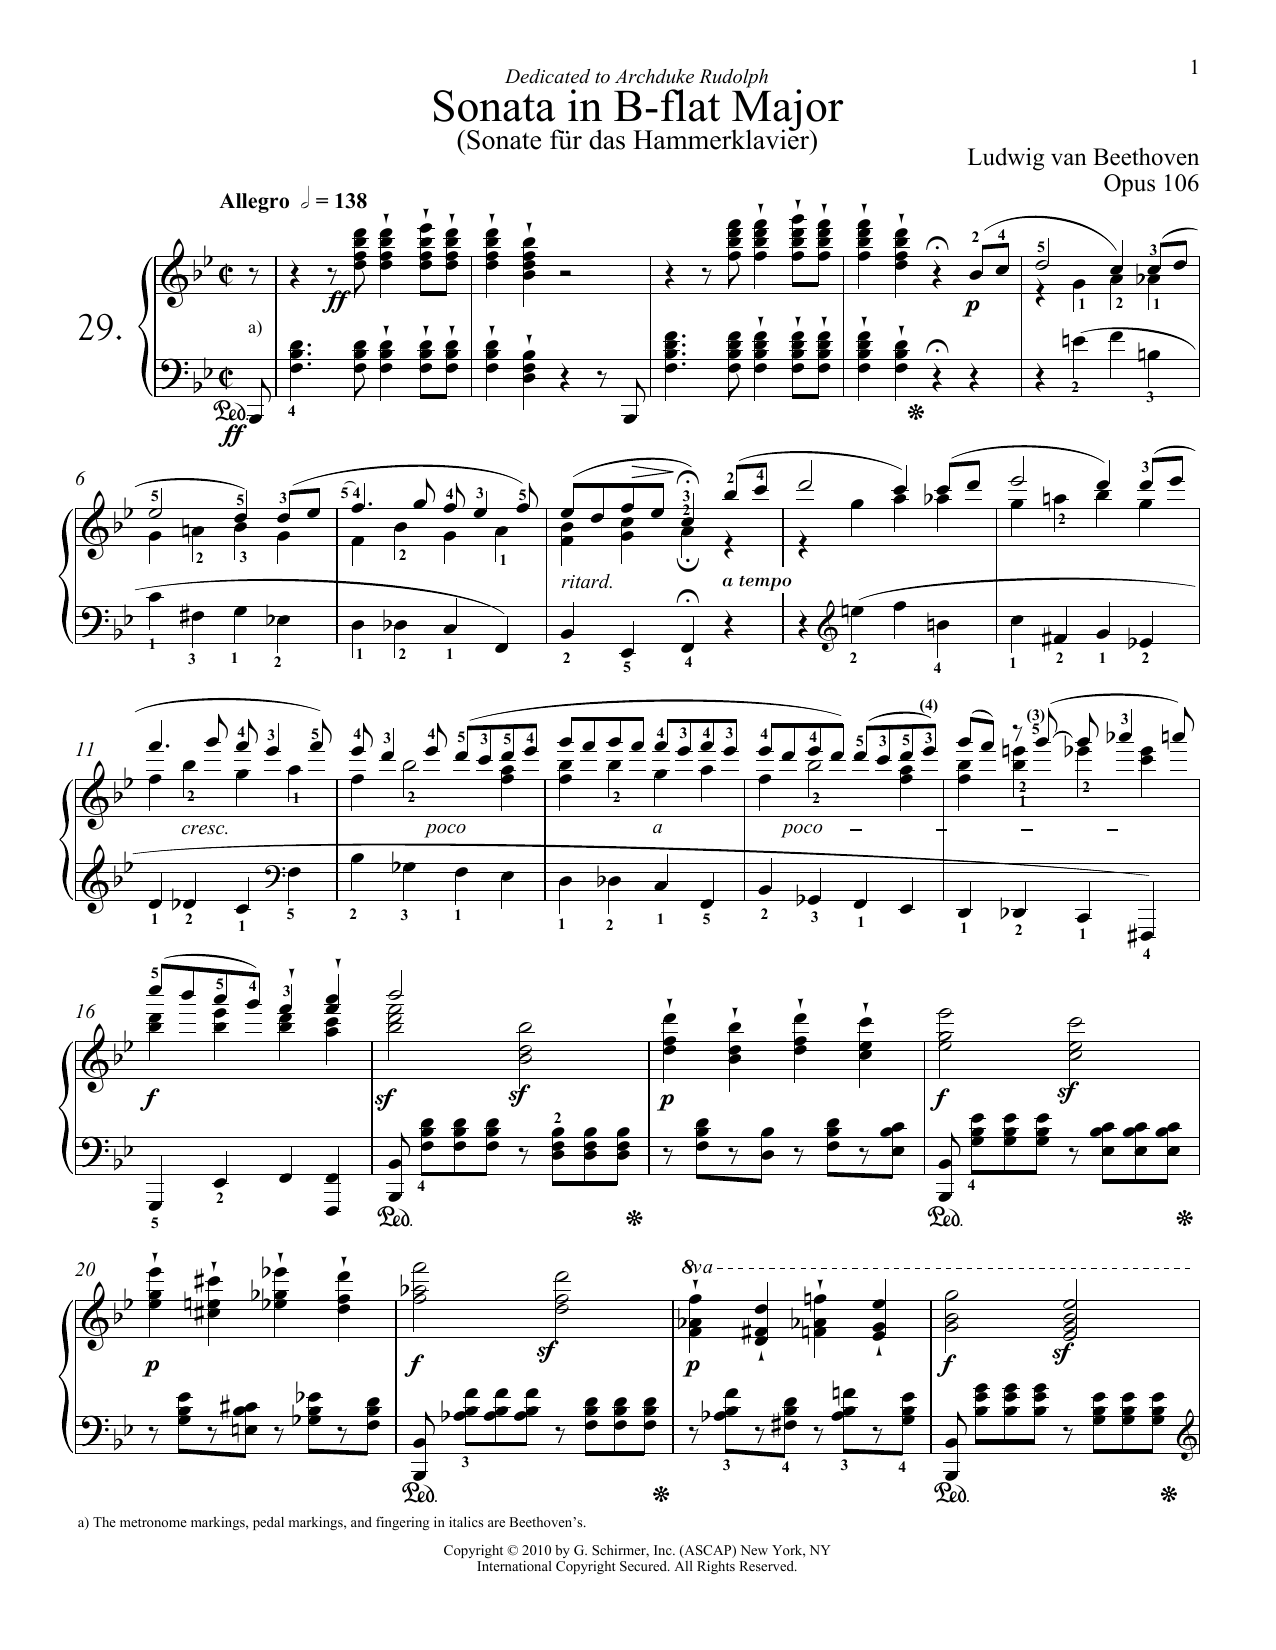 Ludwig van Beethoven Piano Sonata No. 29 In B-Flat Major, Op. 106 Sheet Music Notes & Chords for Piano - Download or Print PDF